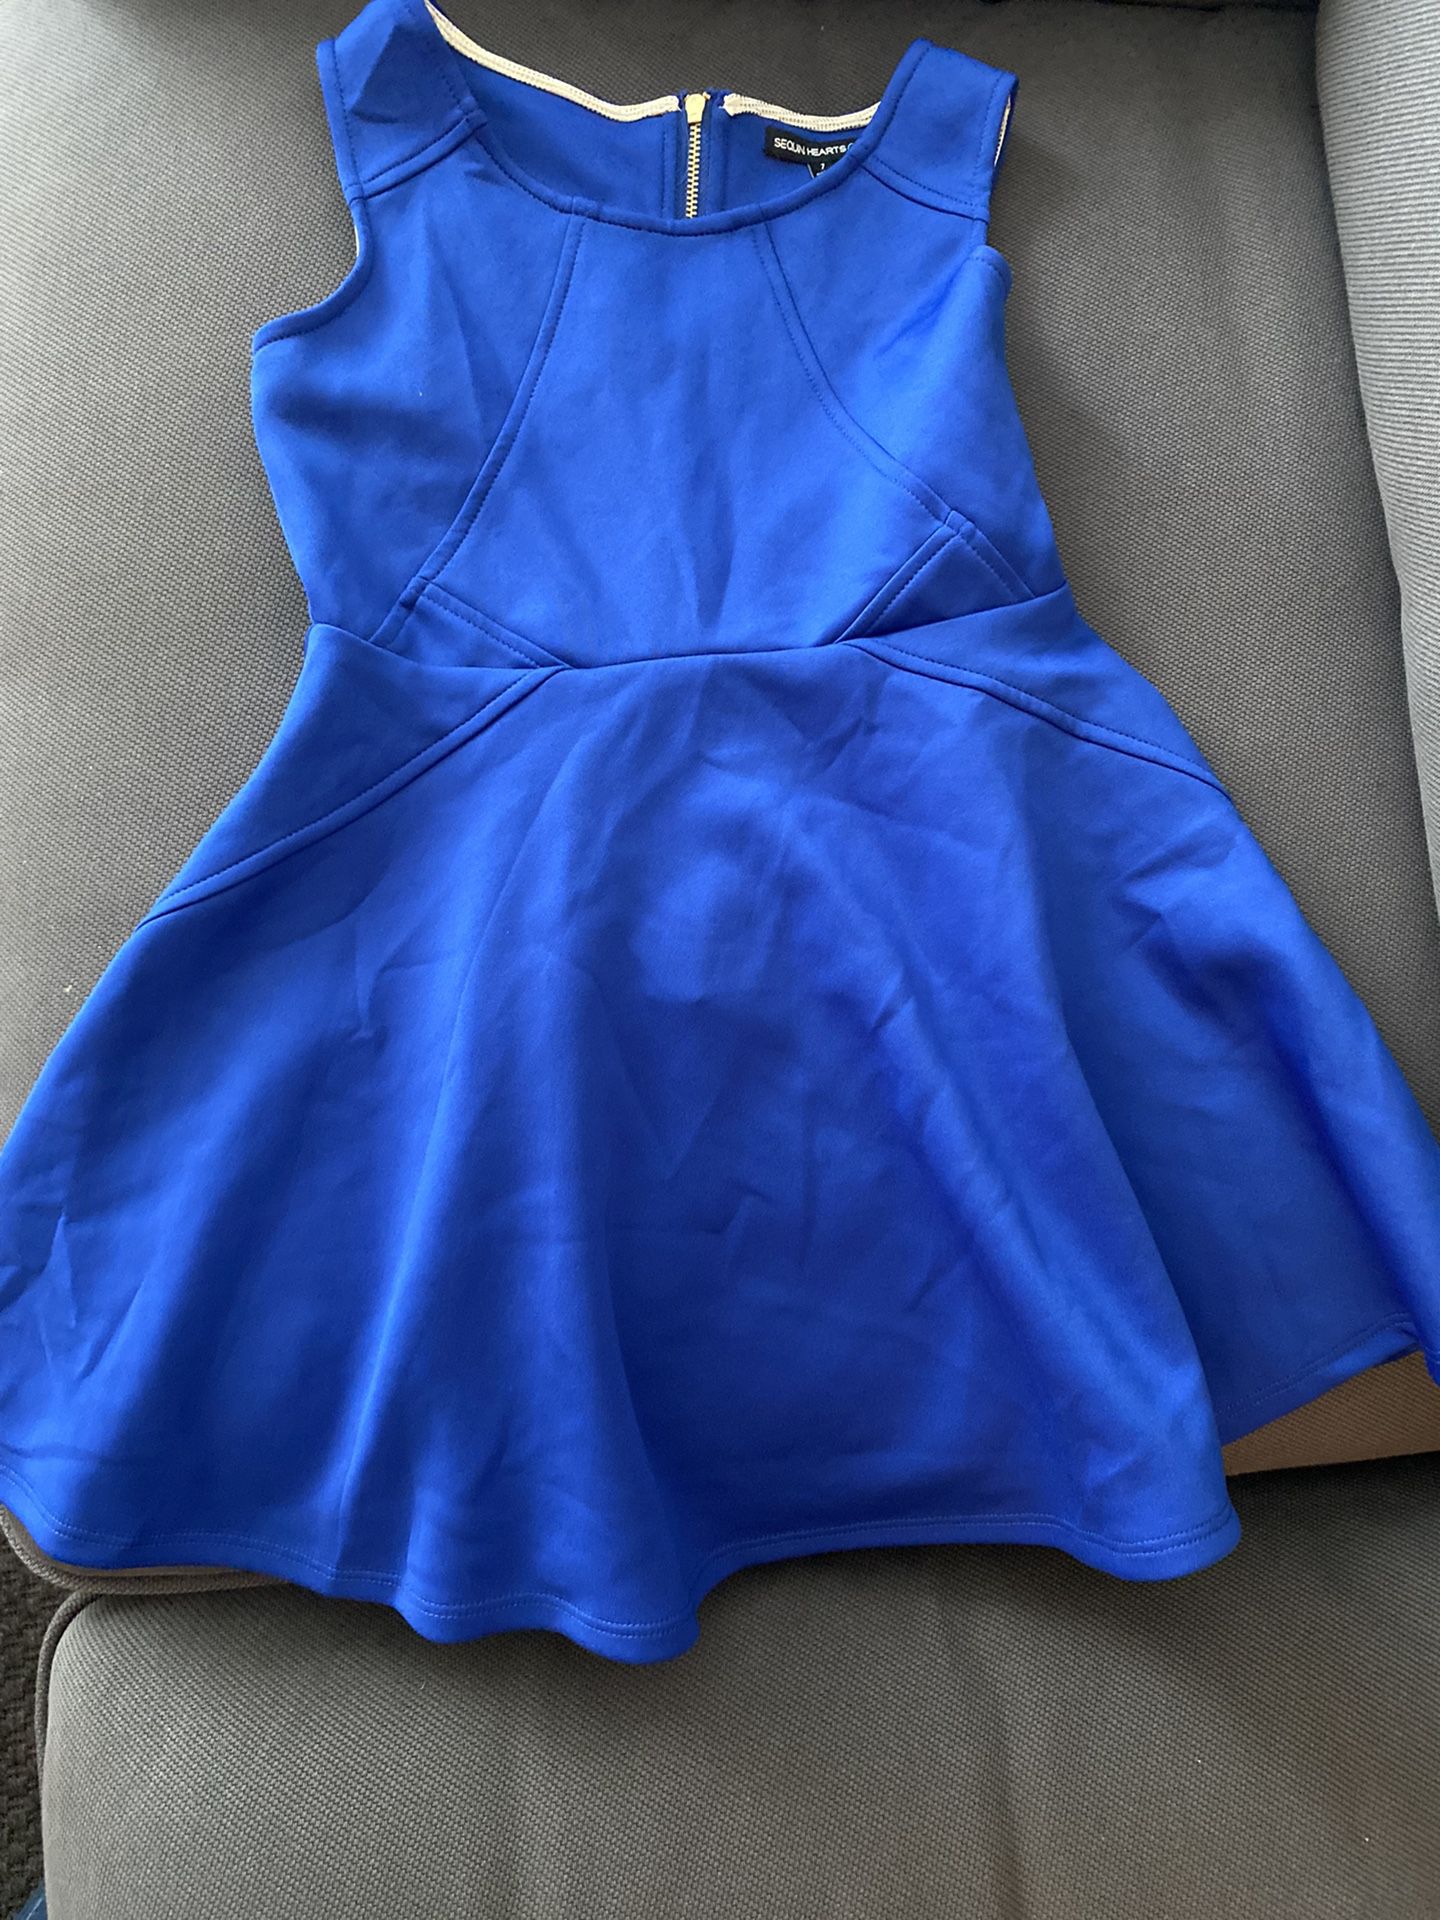 Sequin Hearts Girl Sleeveless Dress. Size 7. Blue. Brand New 